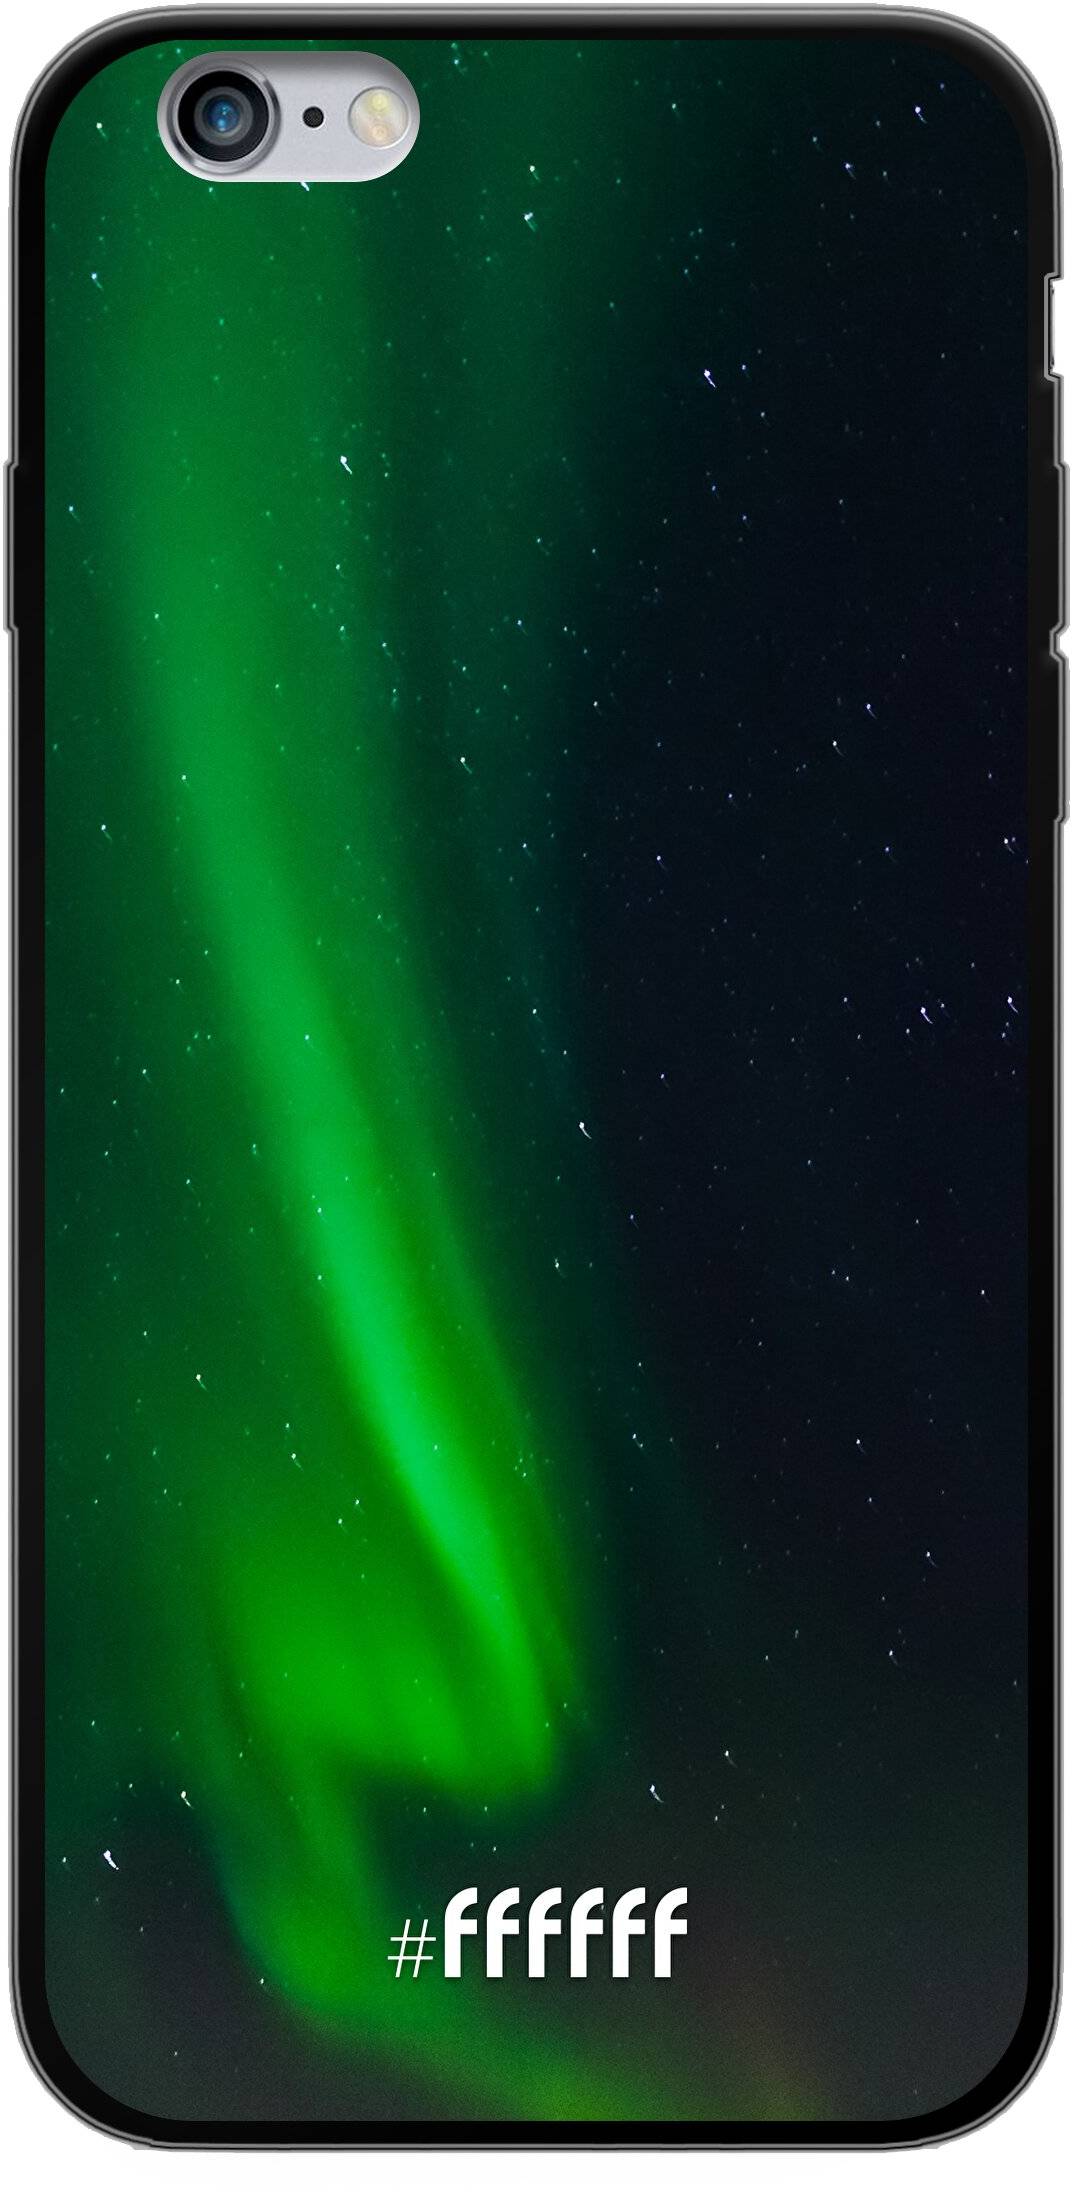 Northern Lights iPhone 6